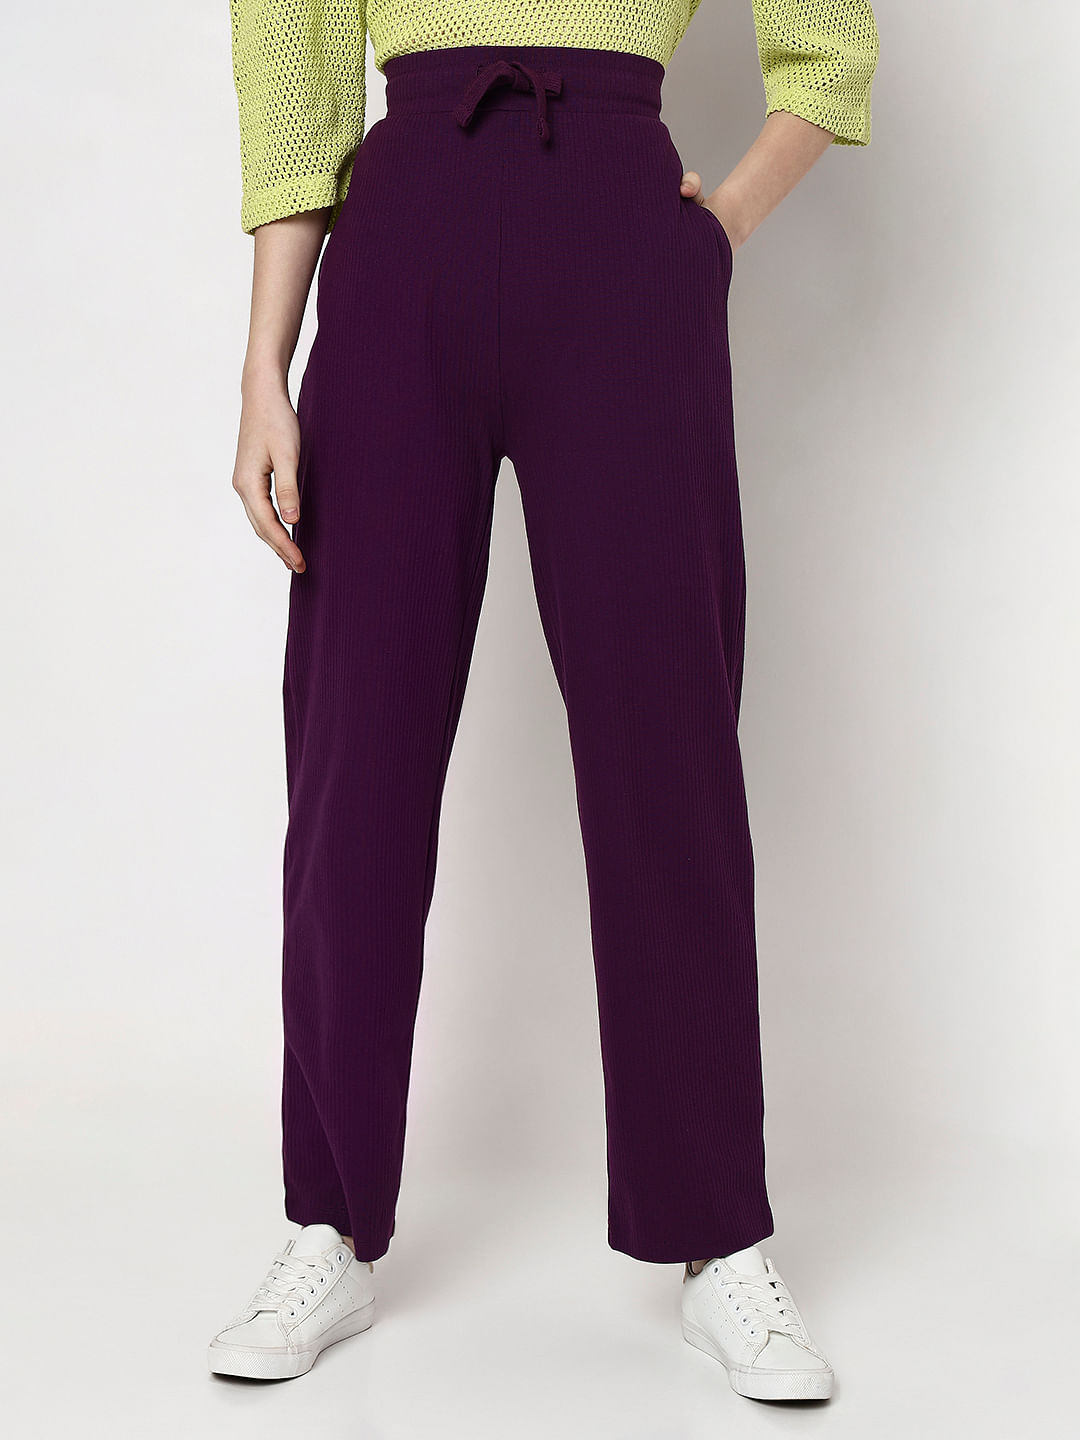 Women's Purple High-Waisted Pants & Leggings